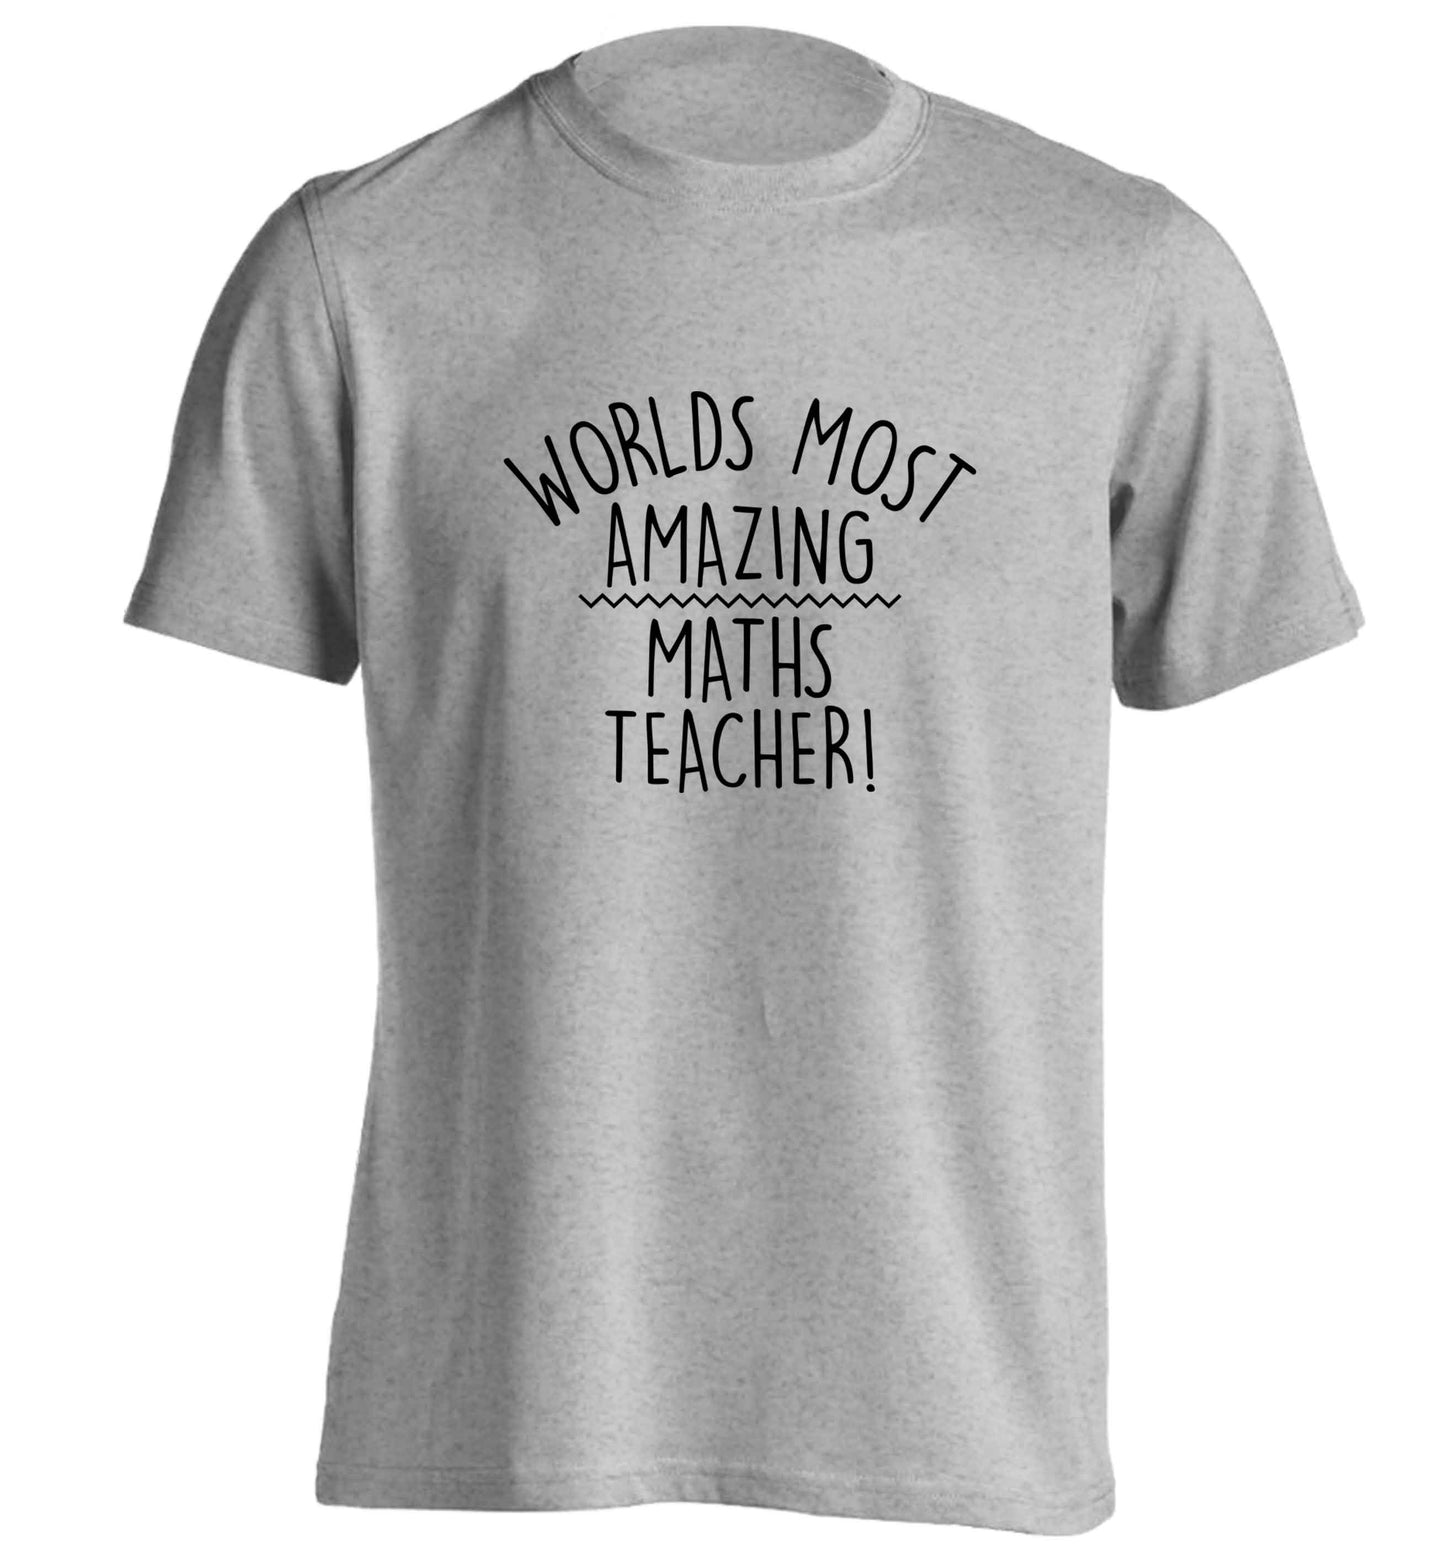 Worlds most amazing maths teacher adults unisex grey Tshirt 2XL